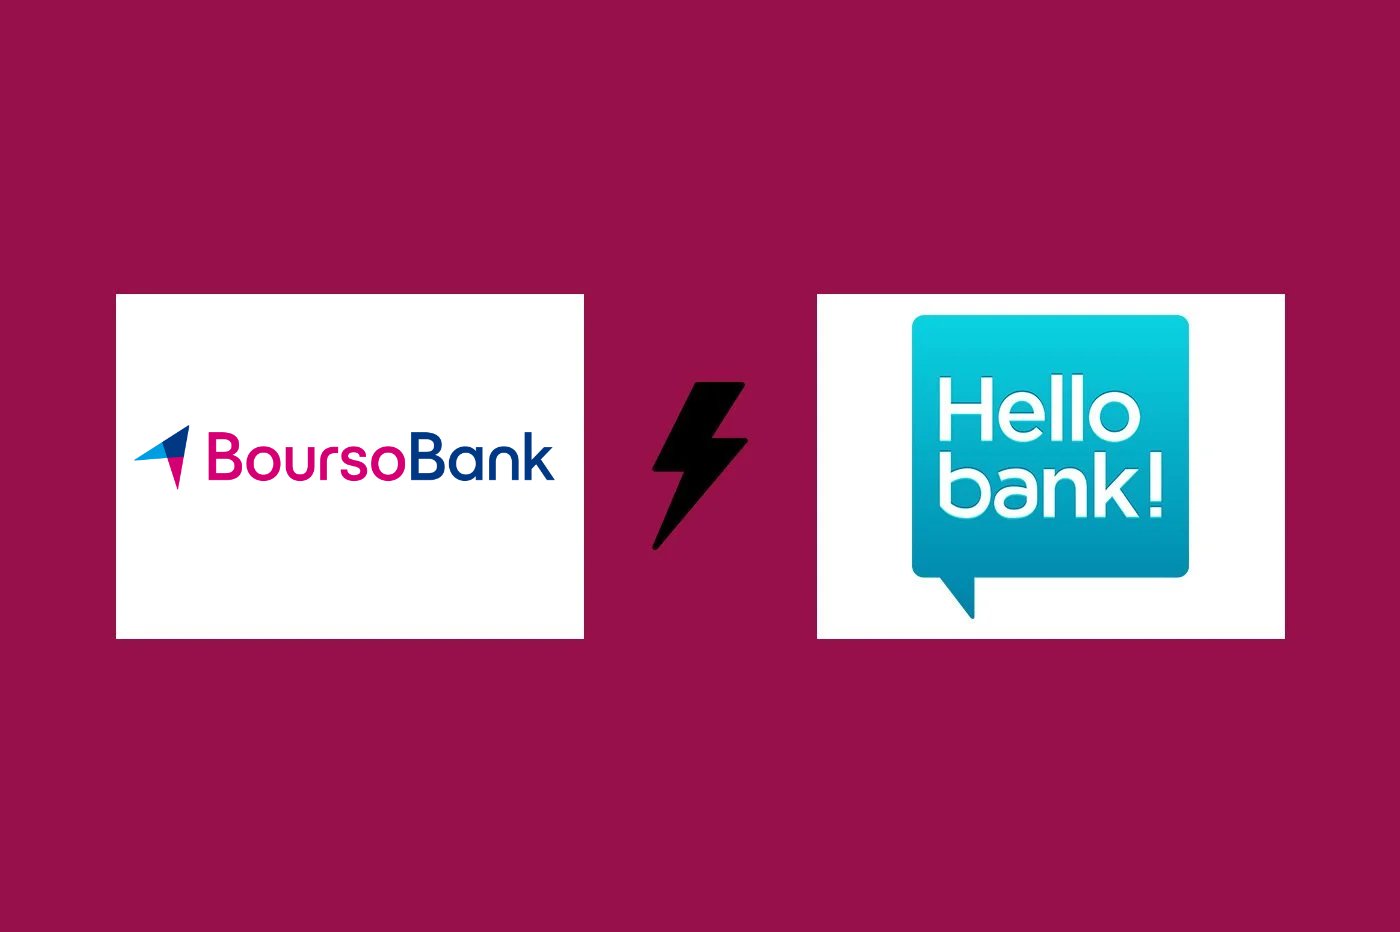 BoursoBank vs HelloBank!